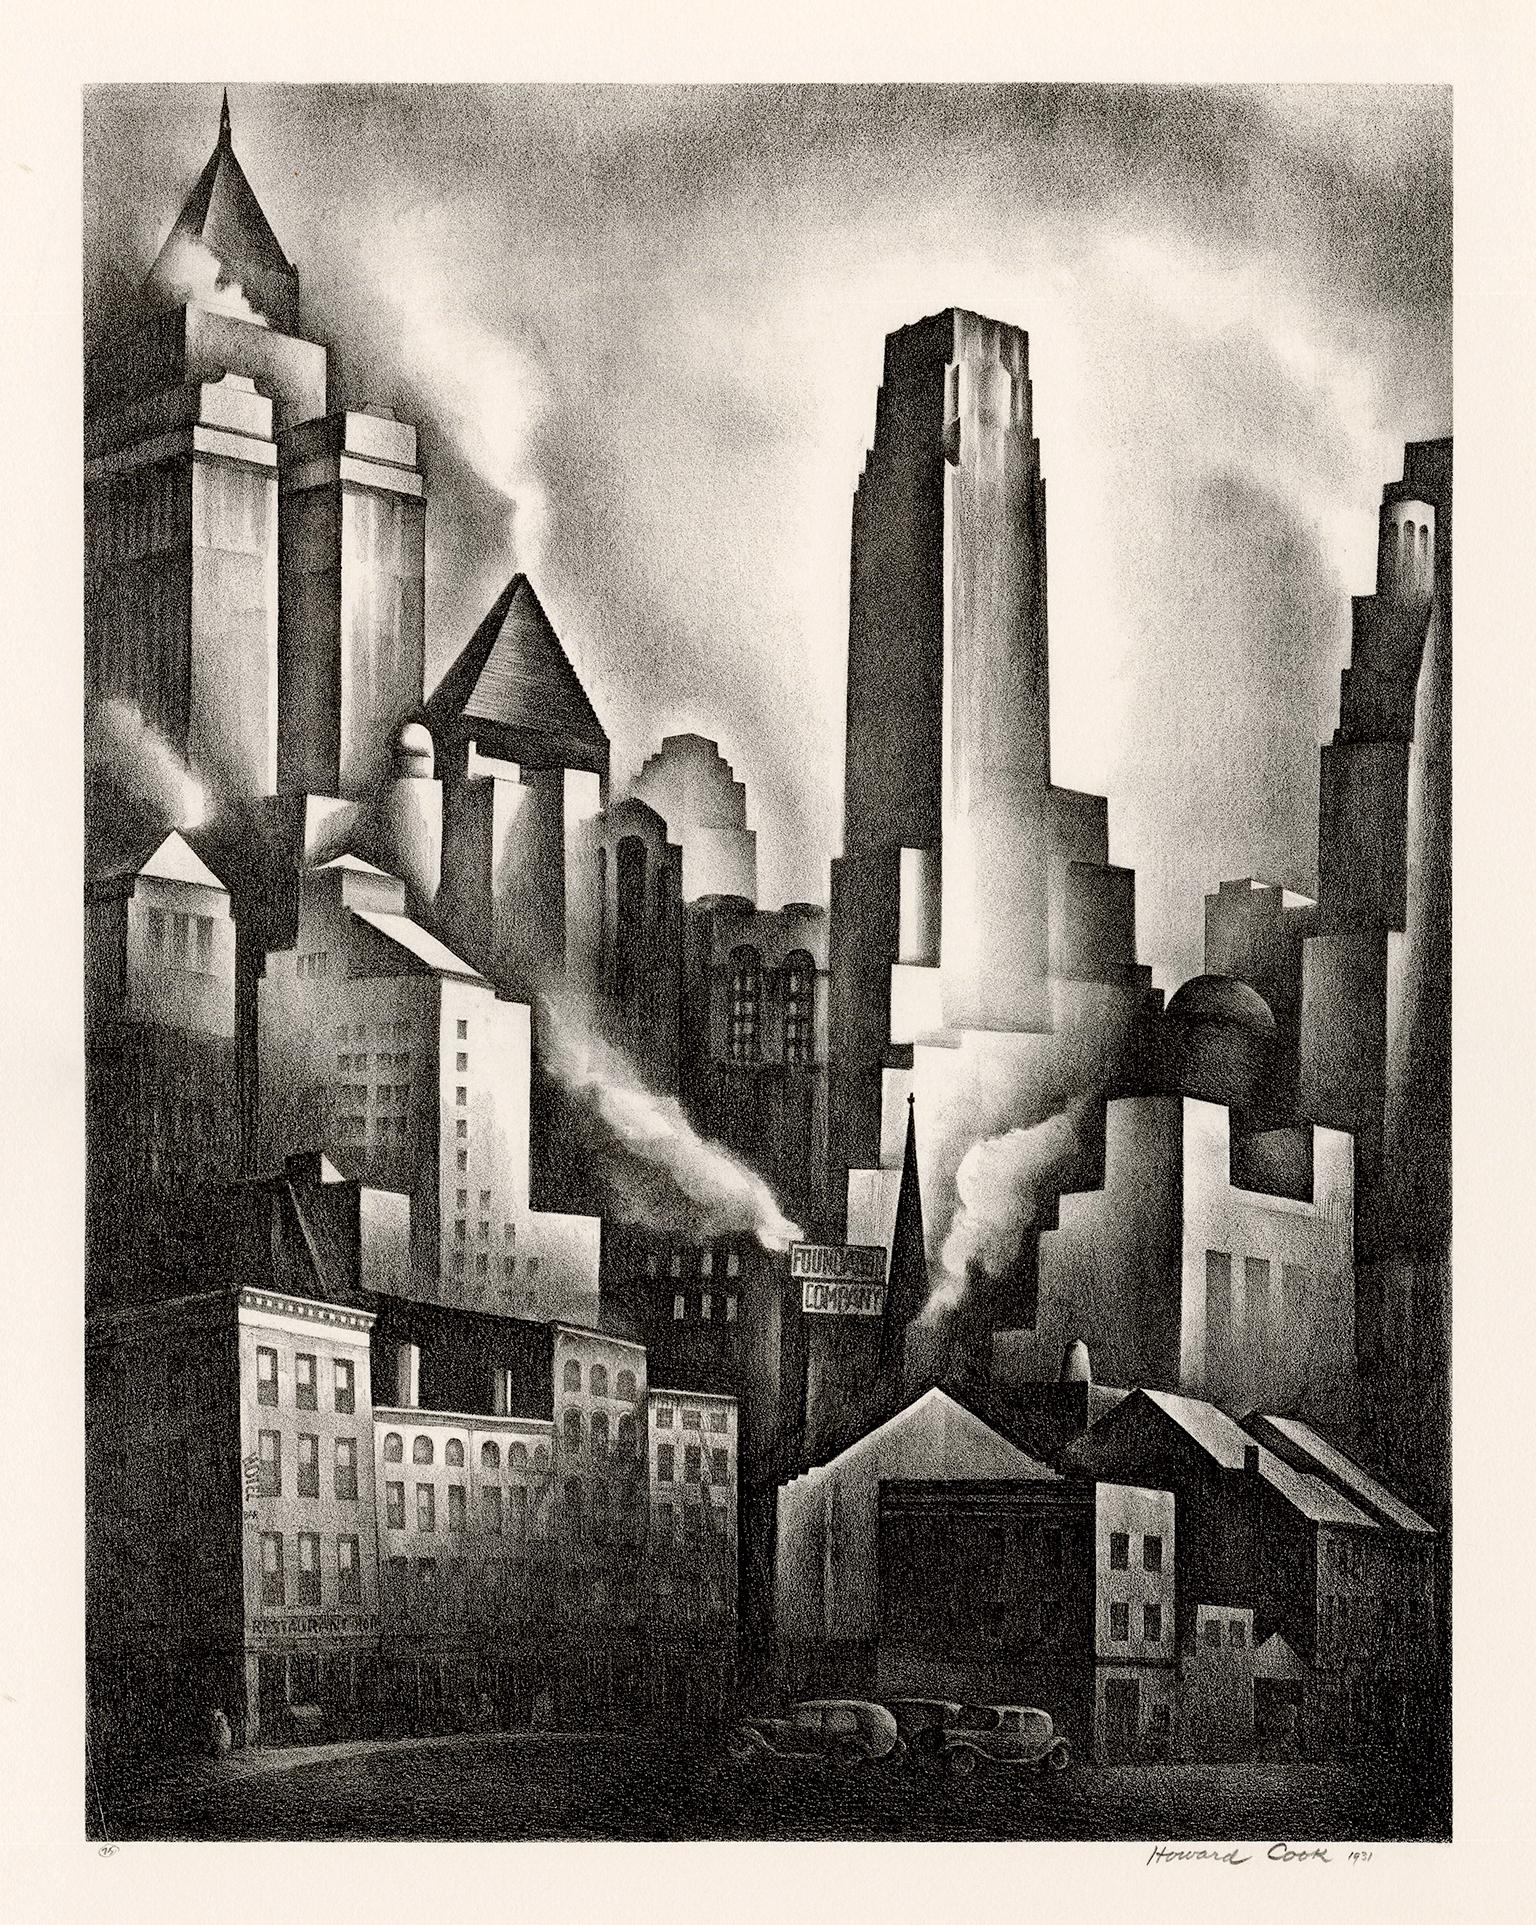 Howard Norton Cook Figurative Print - 'Financial District', New York City — 1930s American Modernism